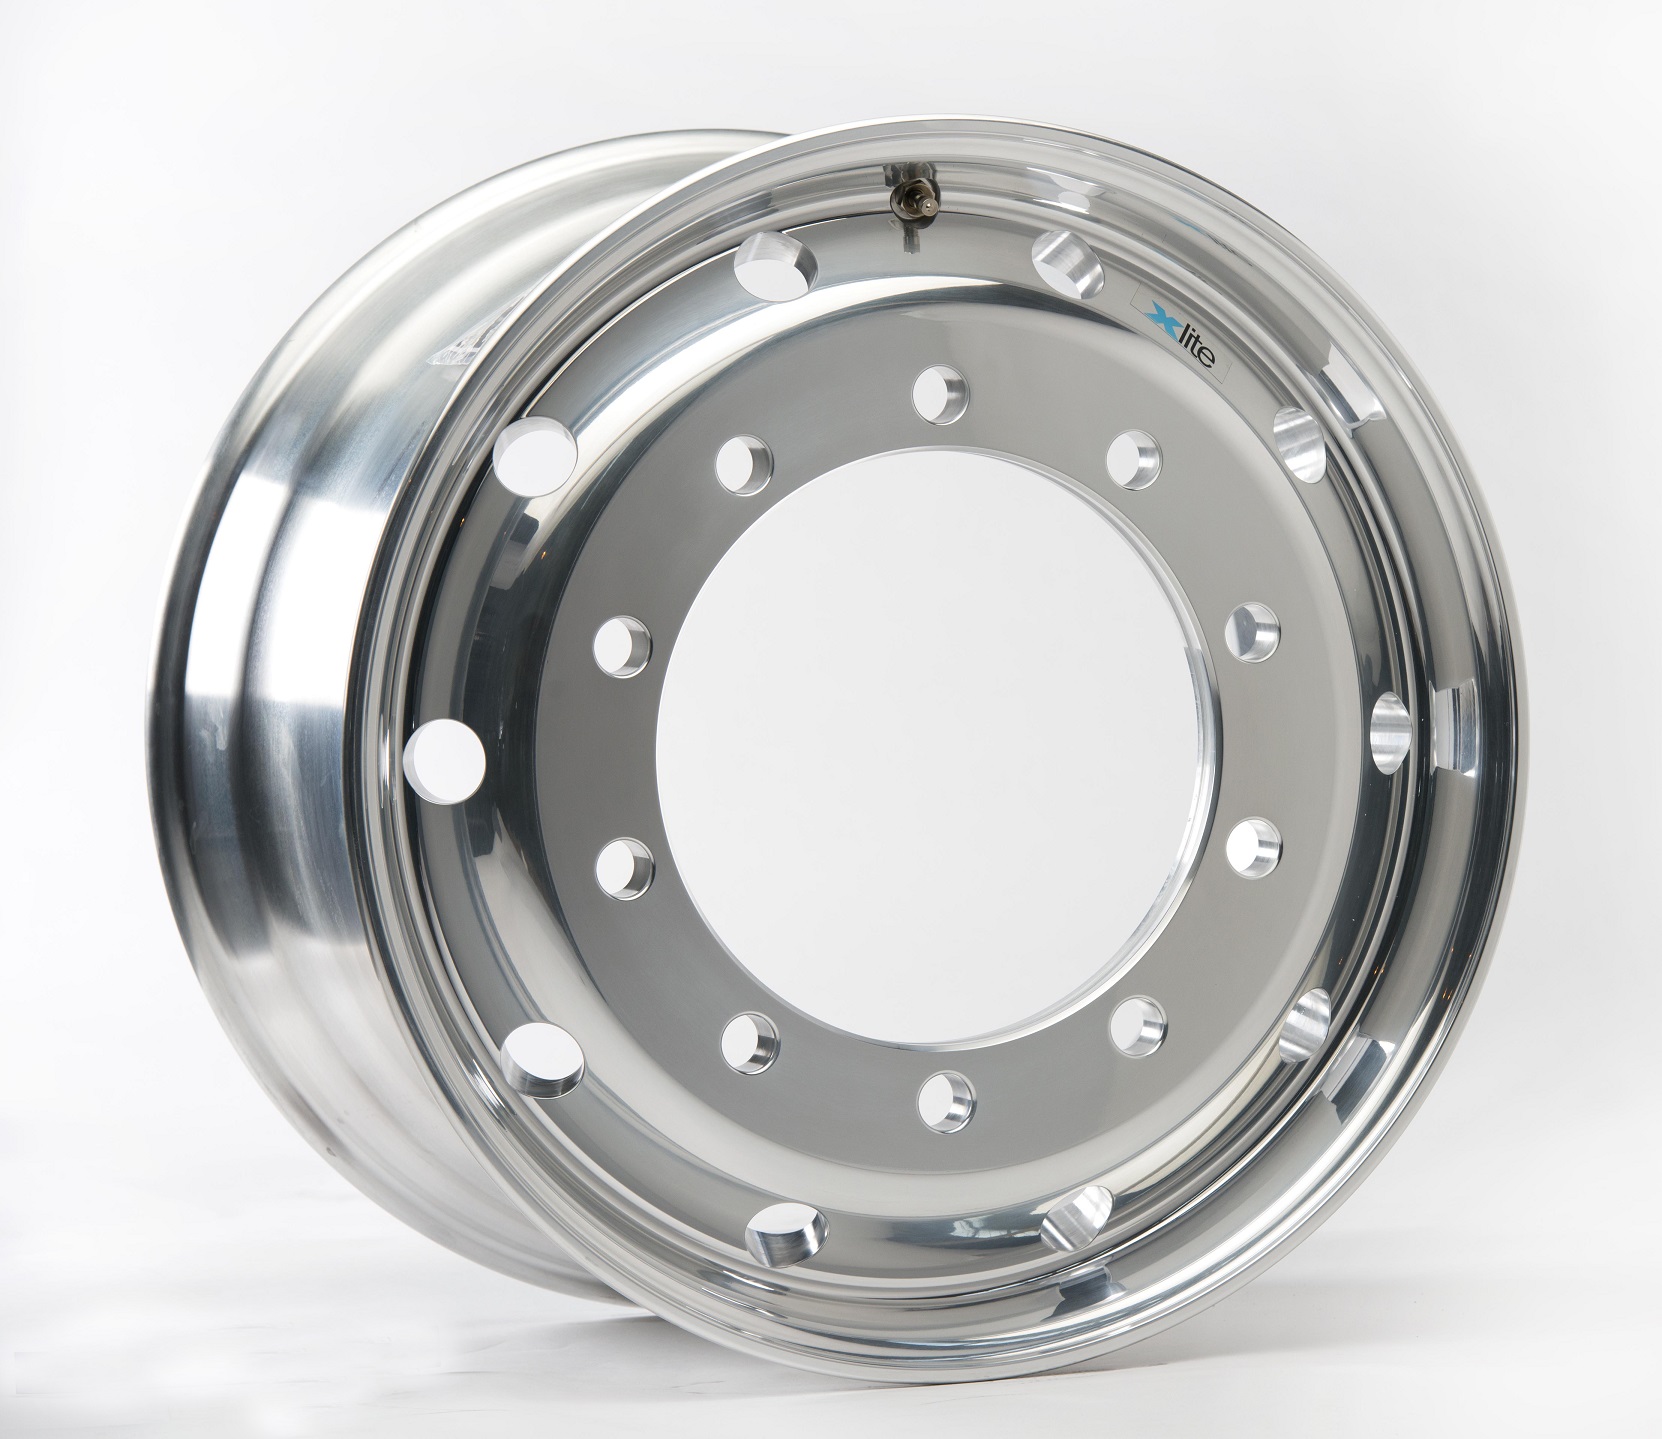 Next gen 11.75×22.5” forged aluminium wheel from MWheels